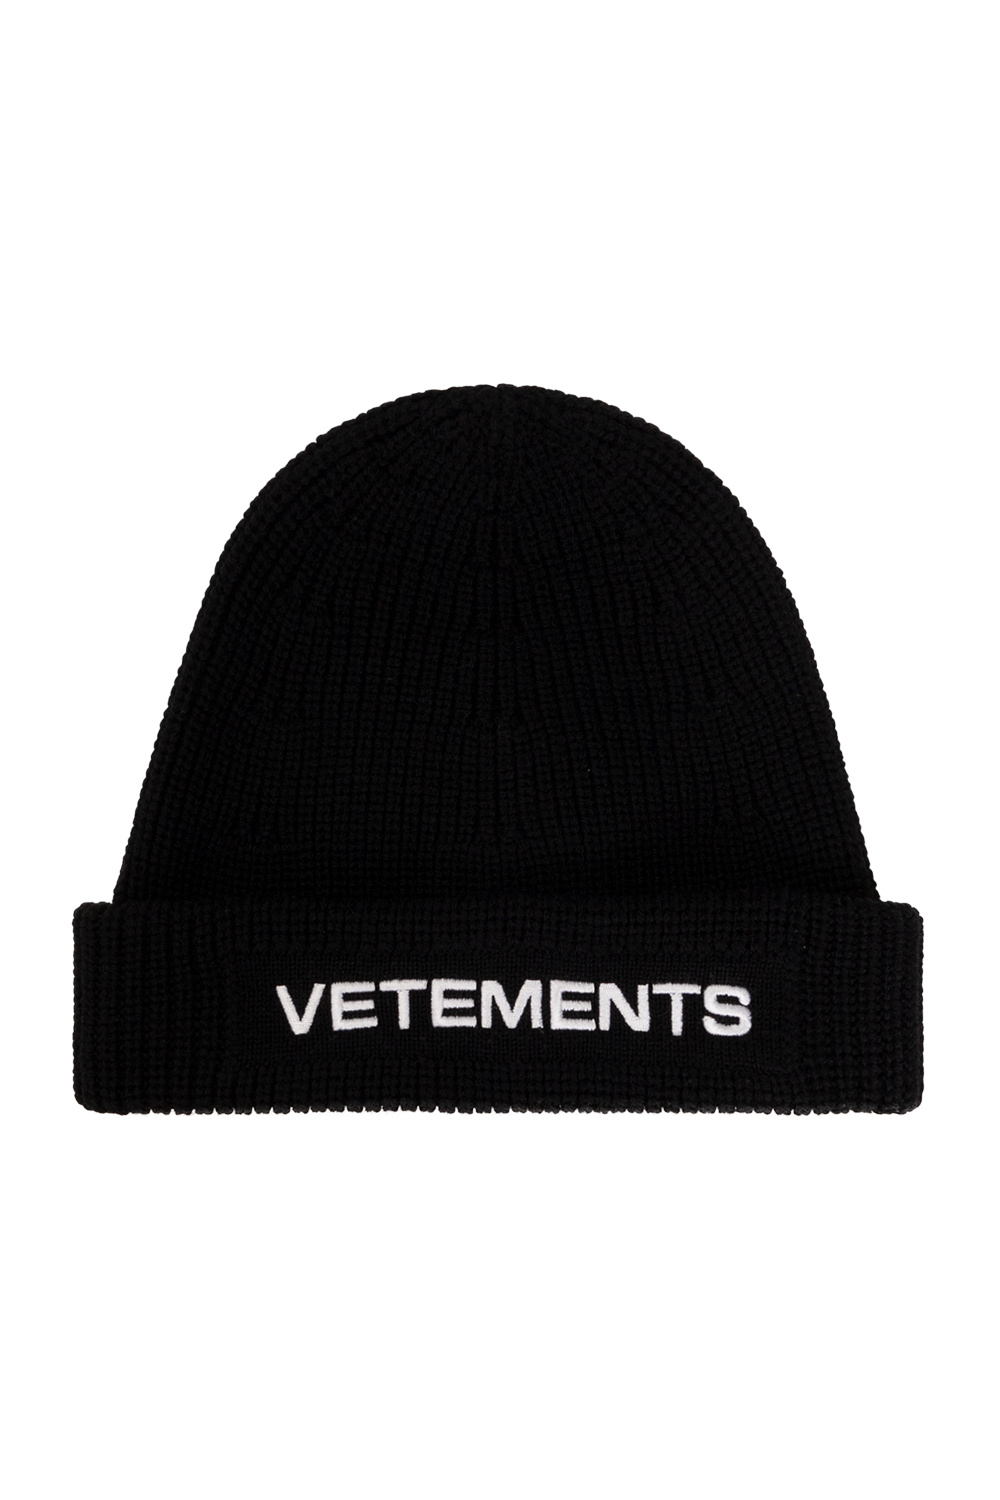 StclaircomoShops | a woven hat | Men\'s Accessorie | VETEMENTS Beanie with  logo